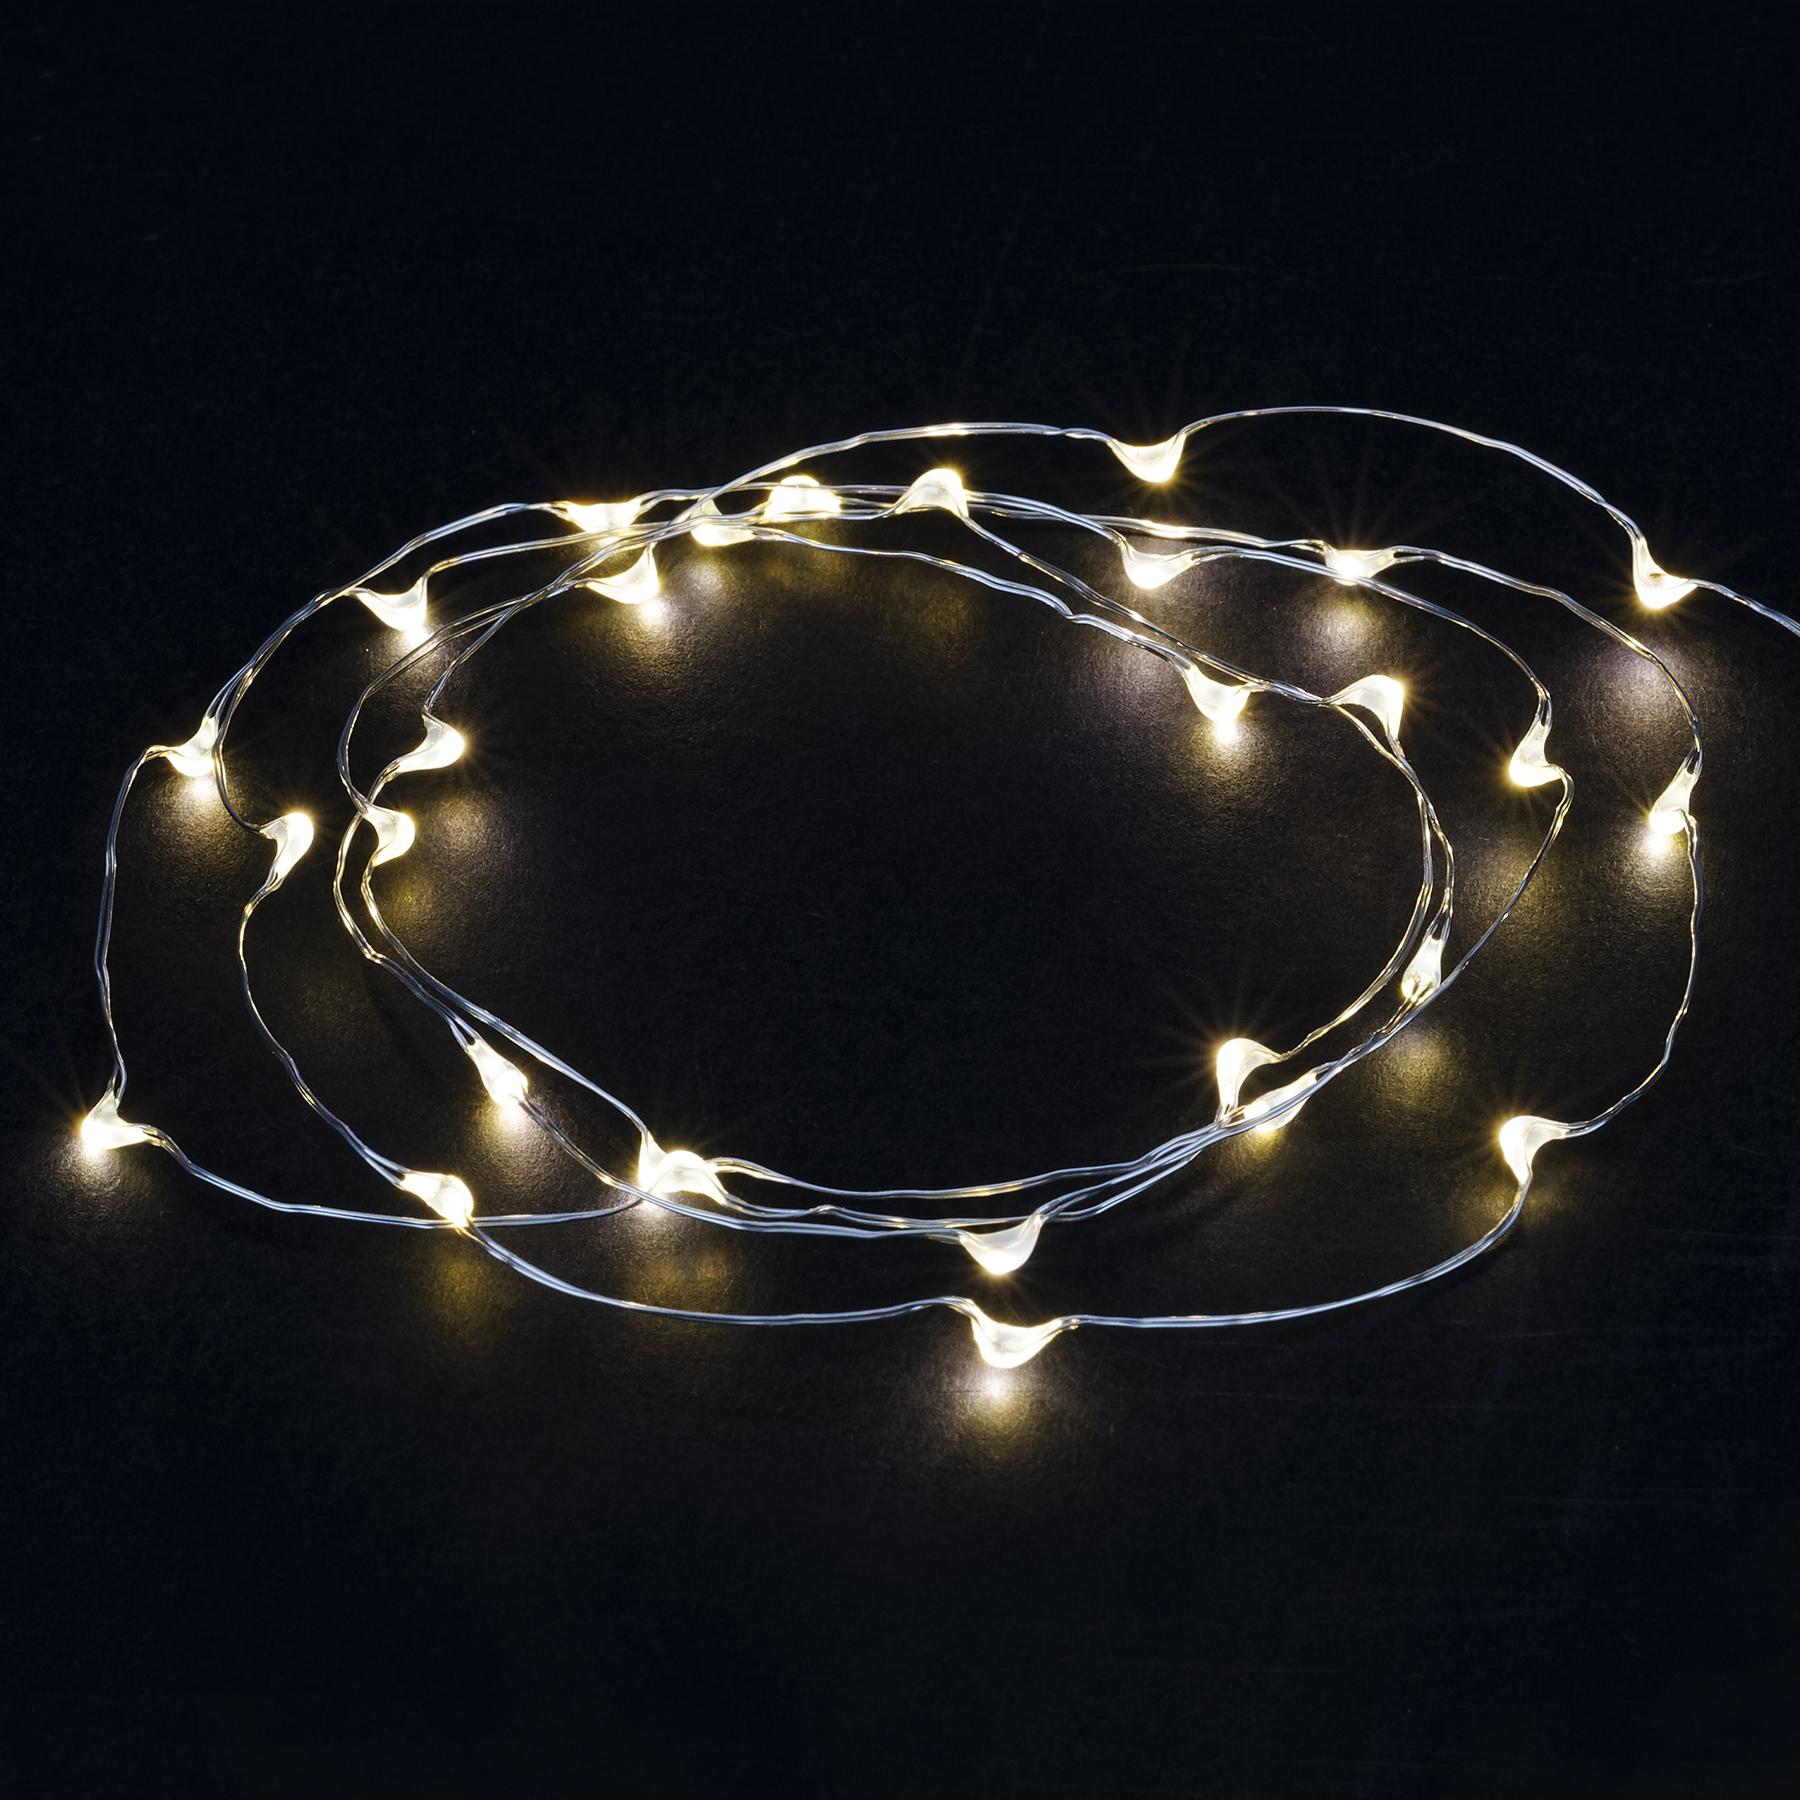 ashland shinmer lights creative collection